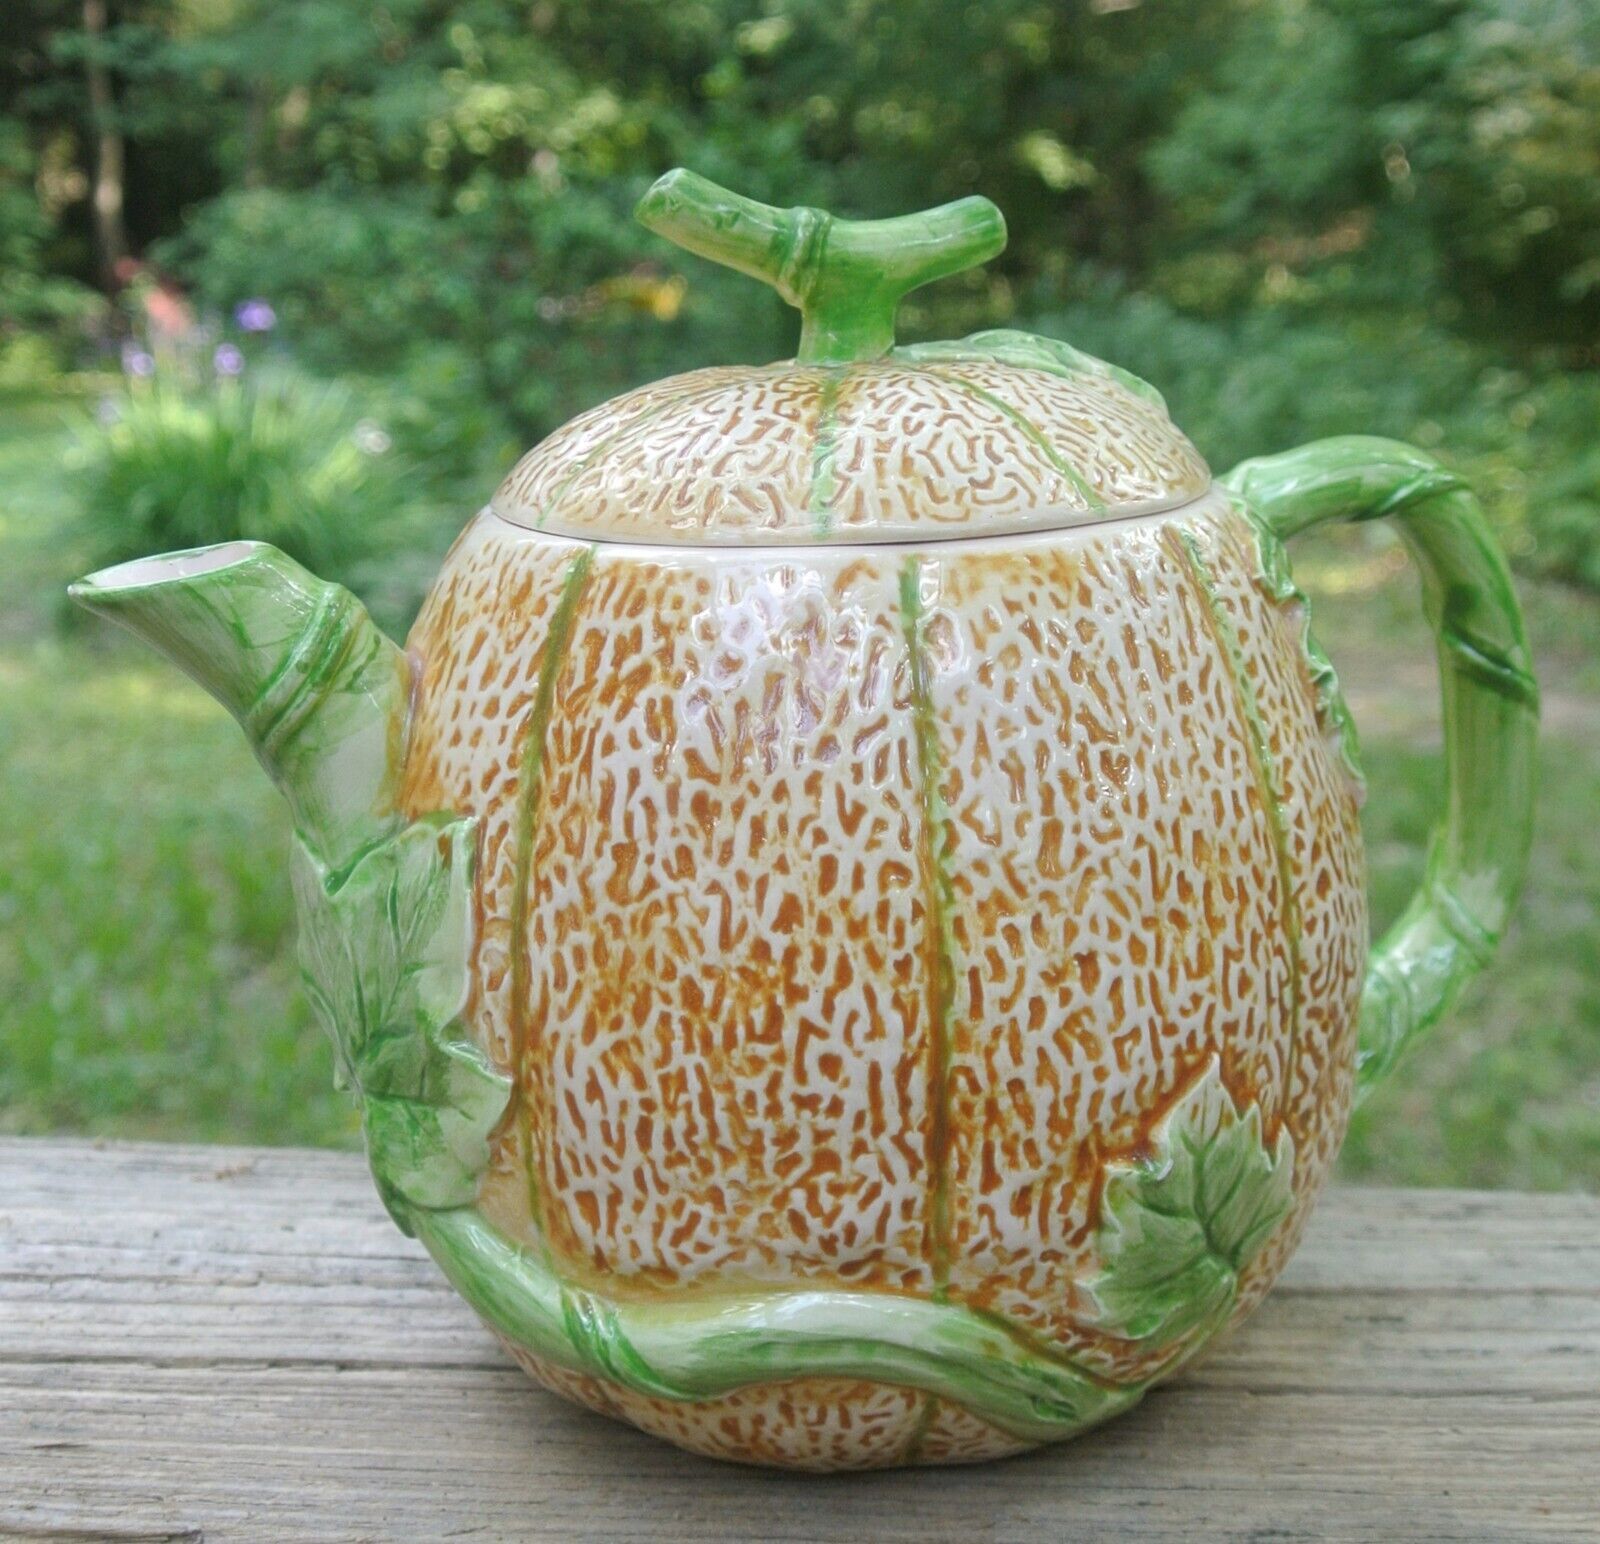 Vintage The Haldon Group Cantaloupe Tea Pot - 1980s